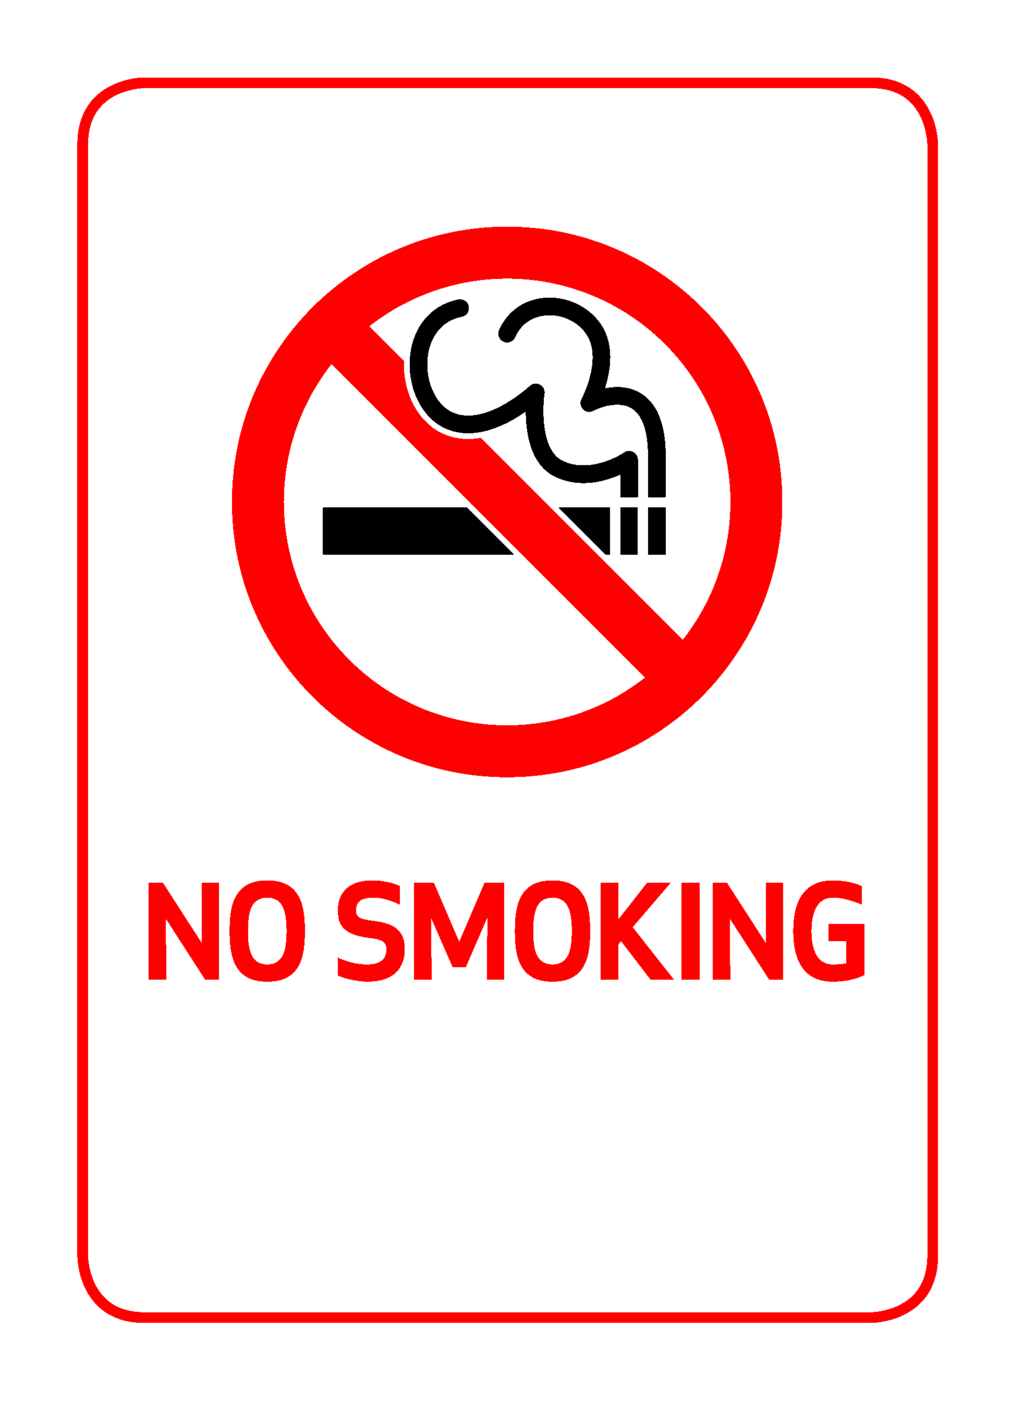 No Smoking icon by SlamItIcon on deviantART